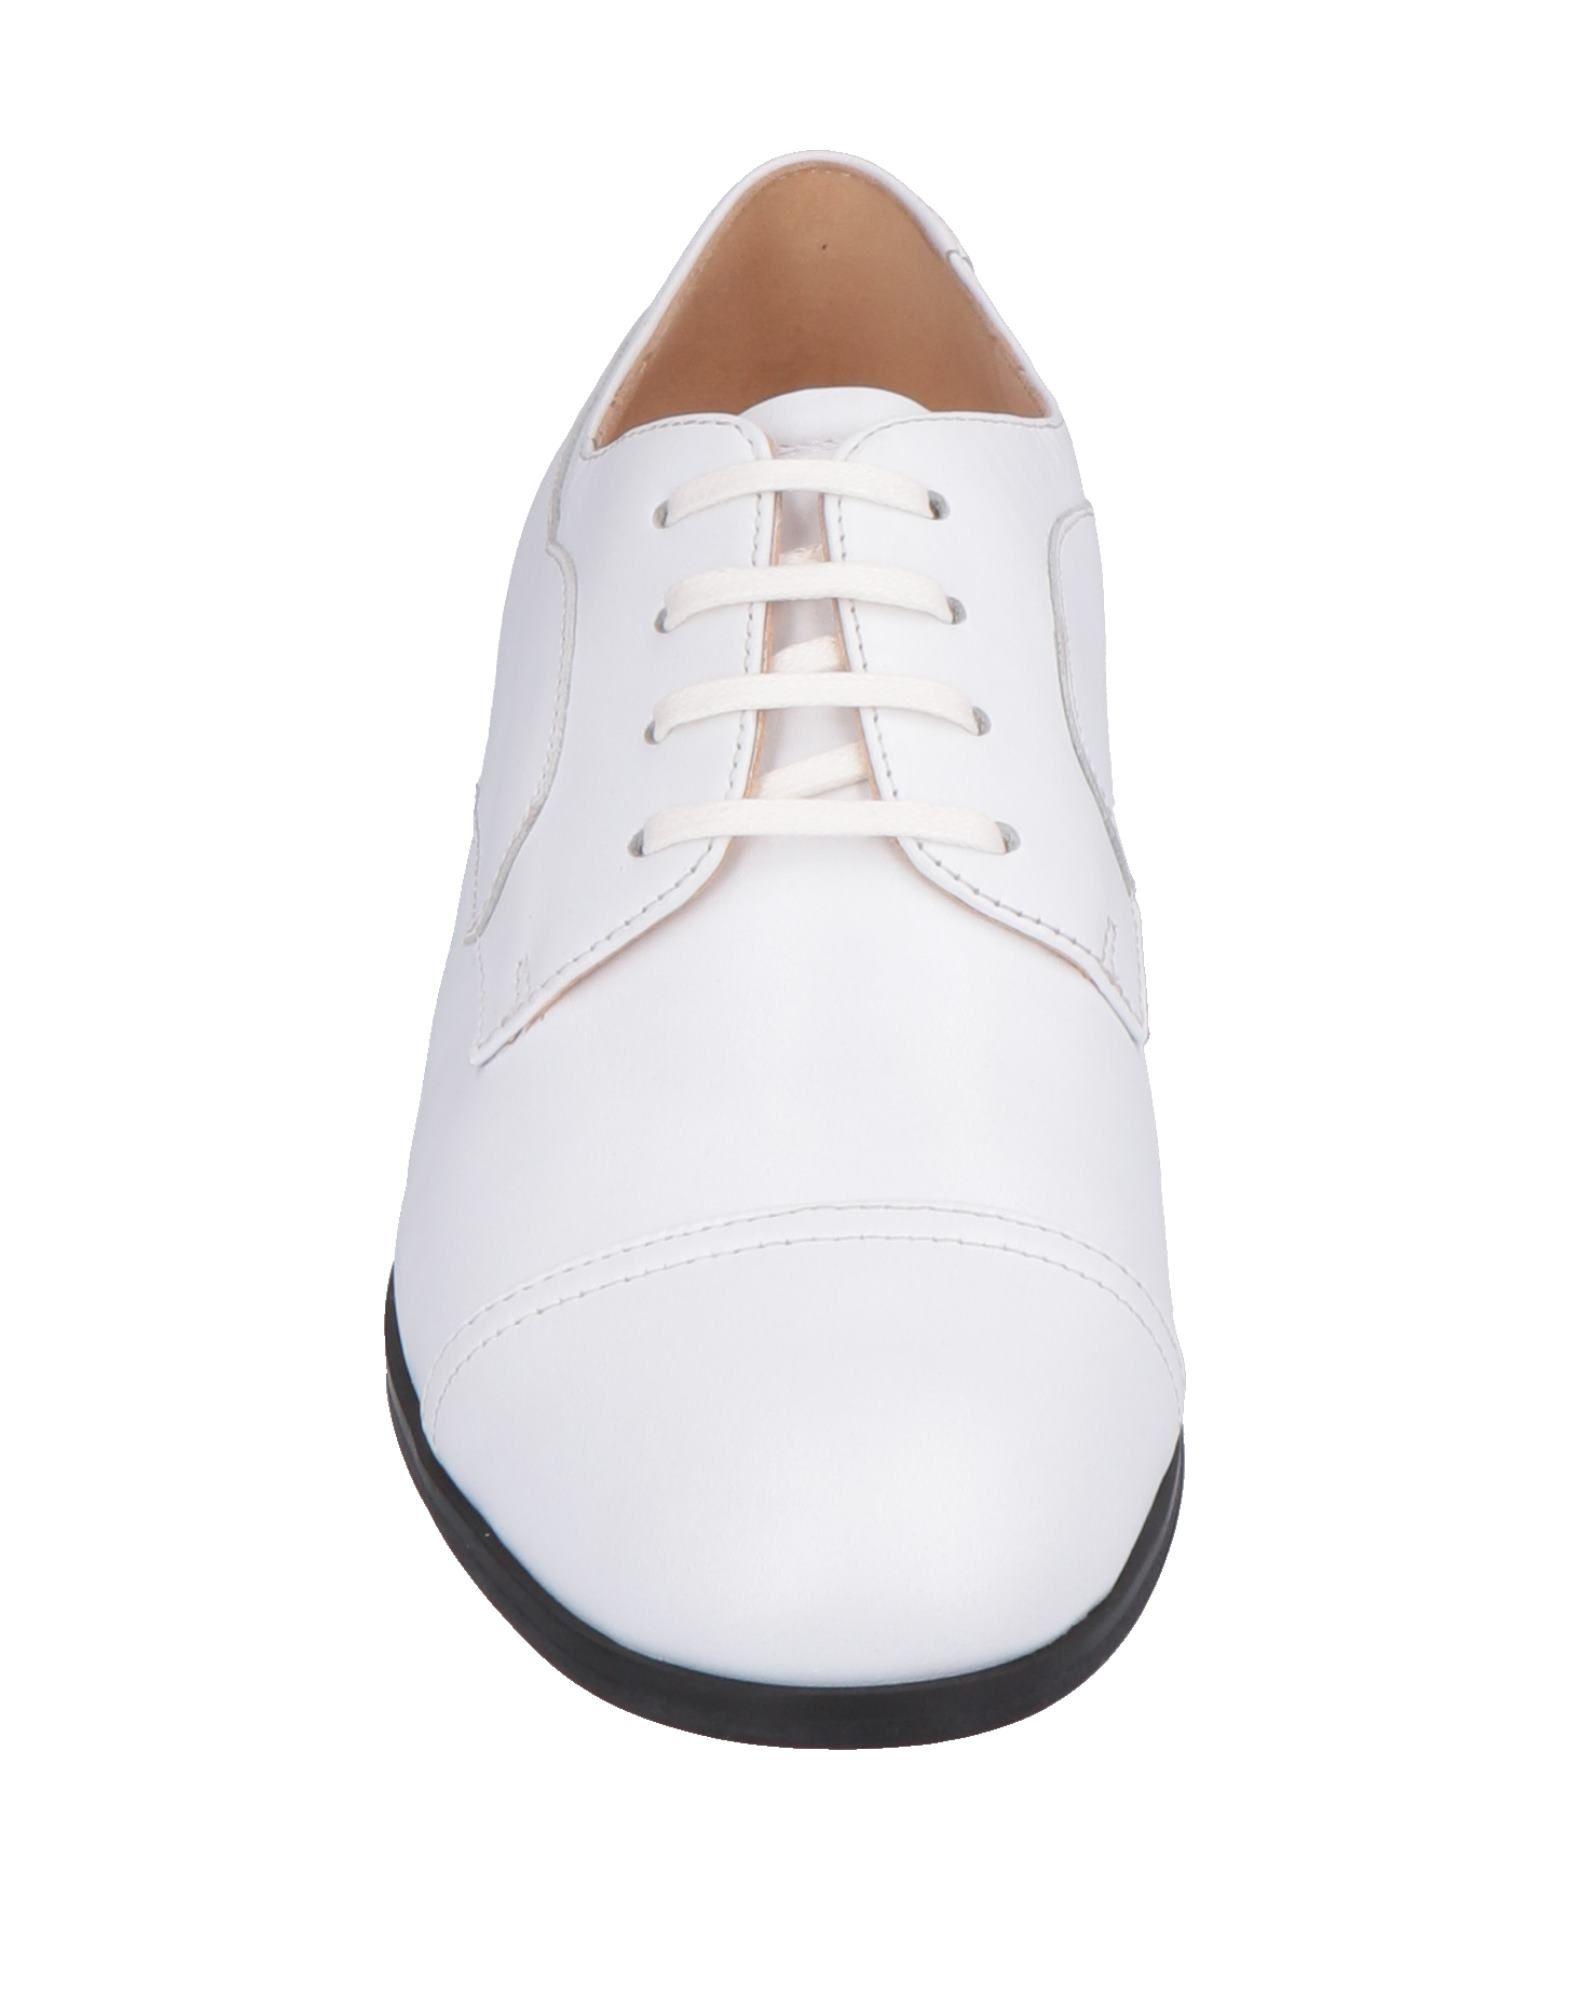 Jil Sander Navy Laceup Shoe in White Lyst